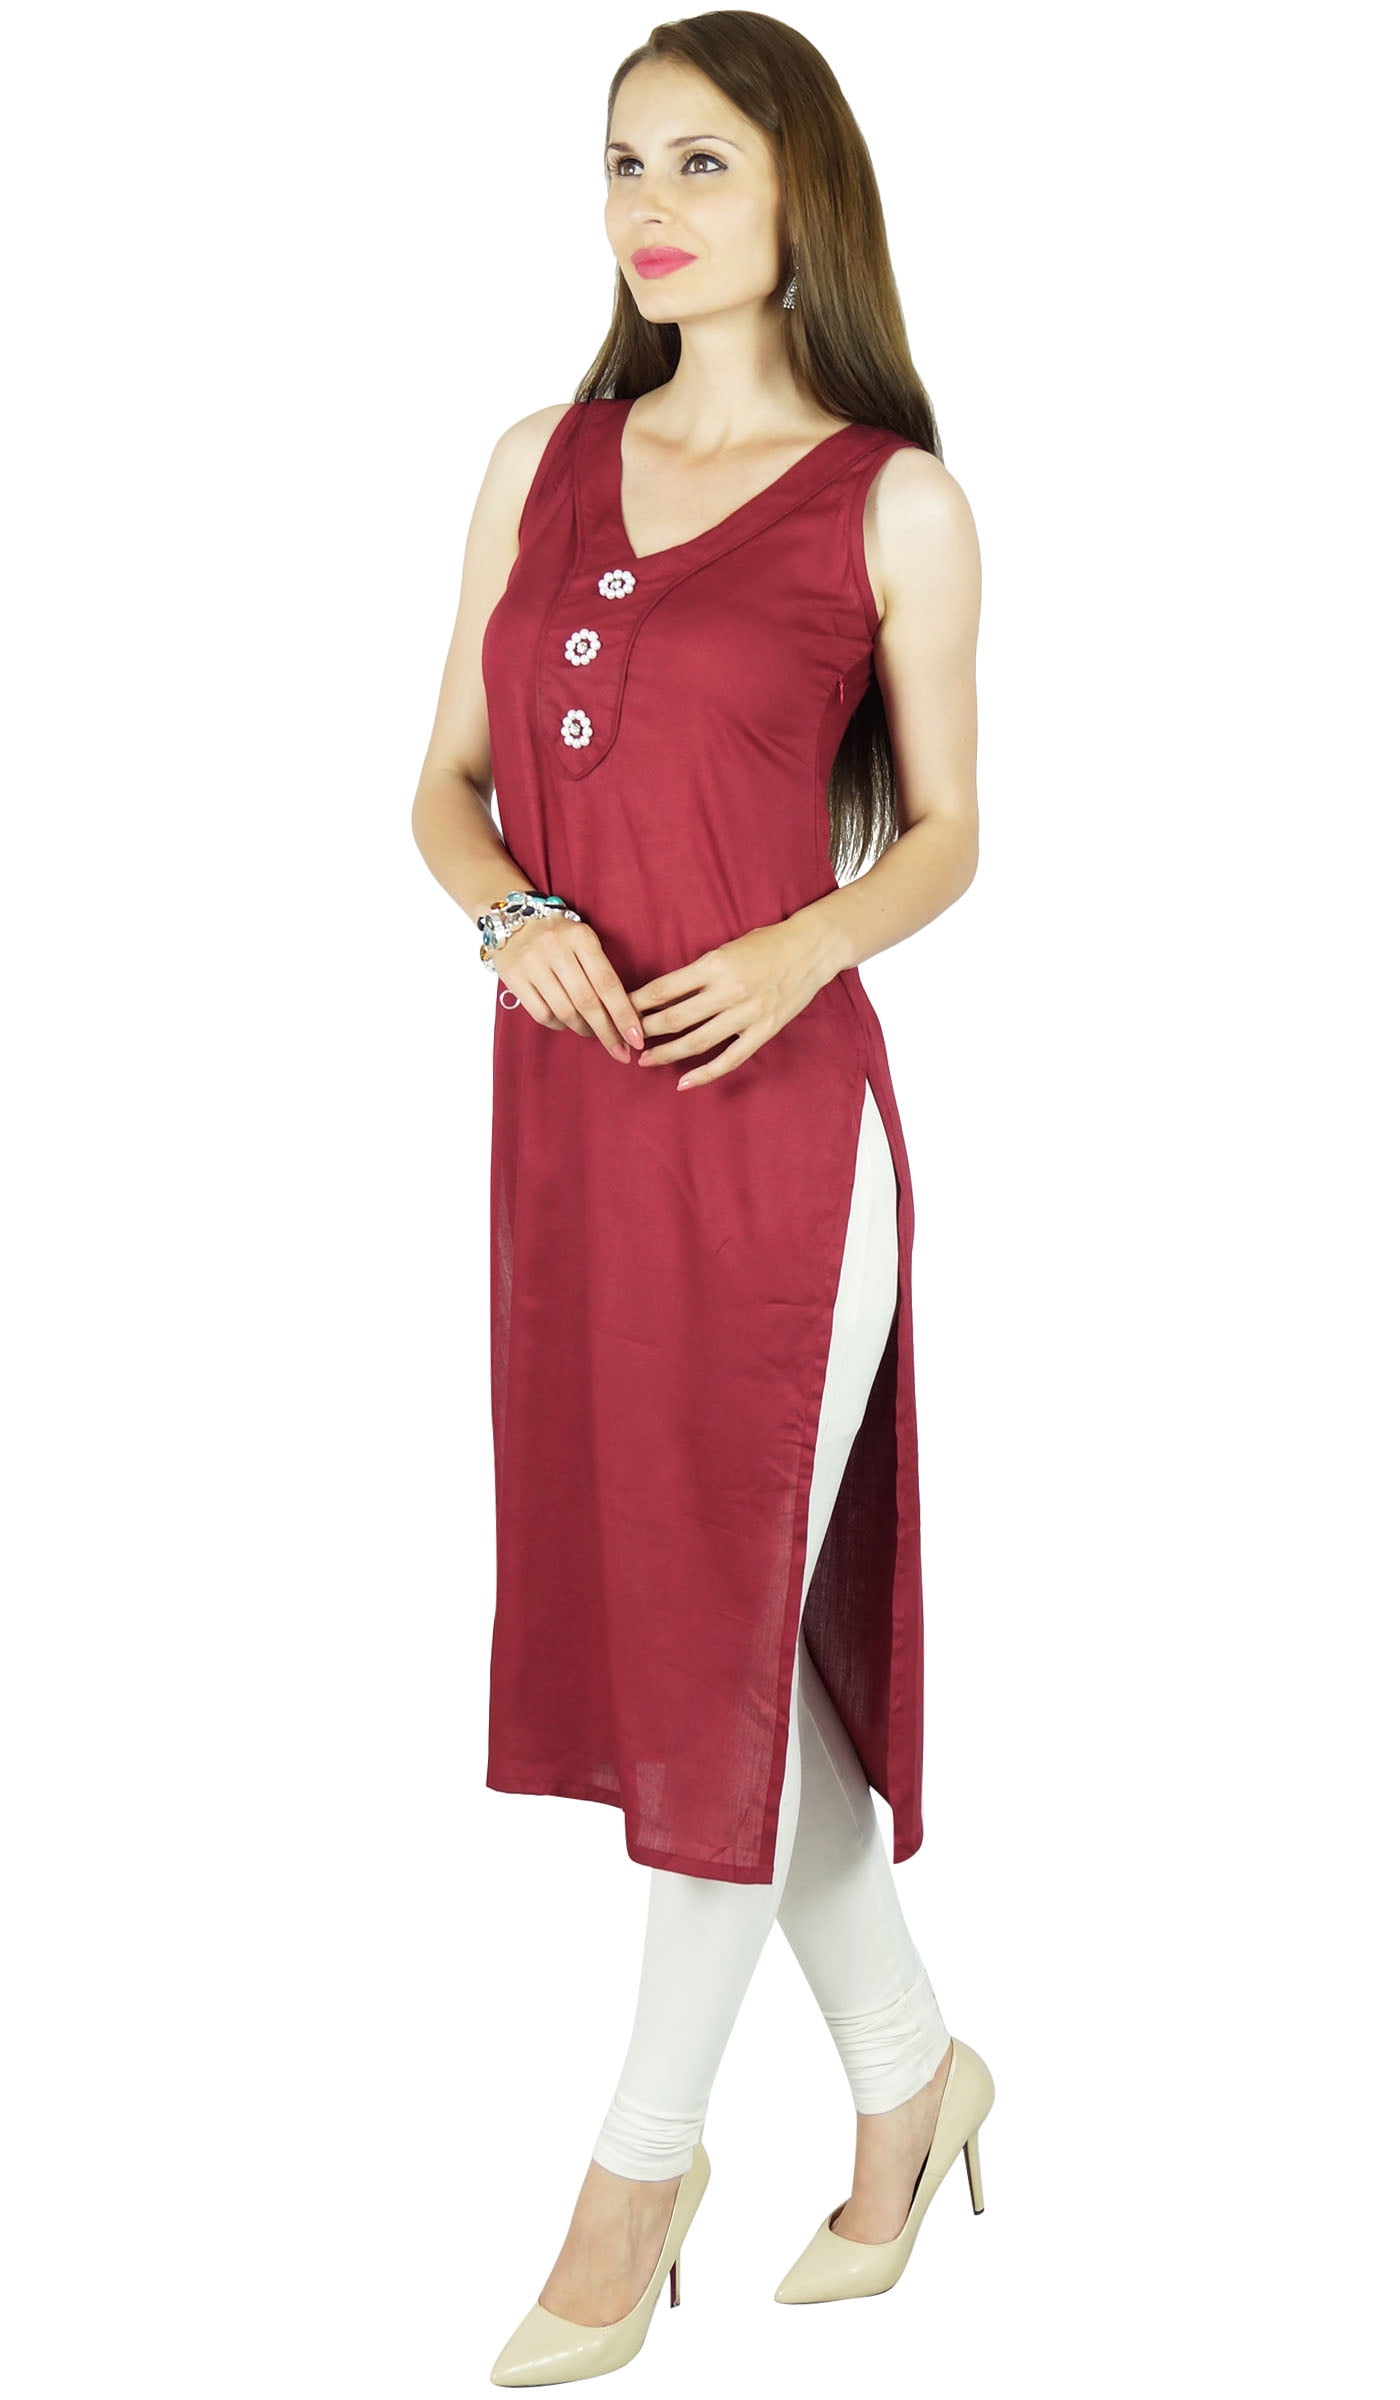 Share more than 64 ladies sleeveless kurti super hot